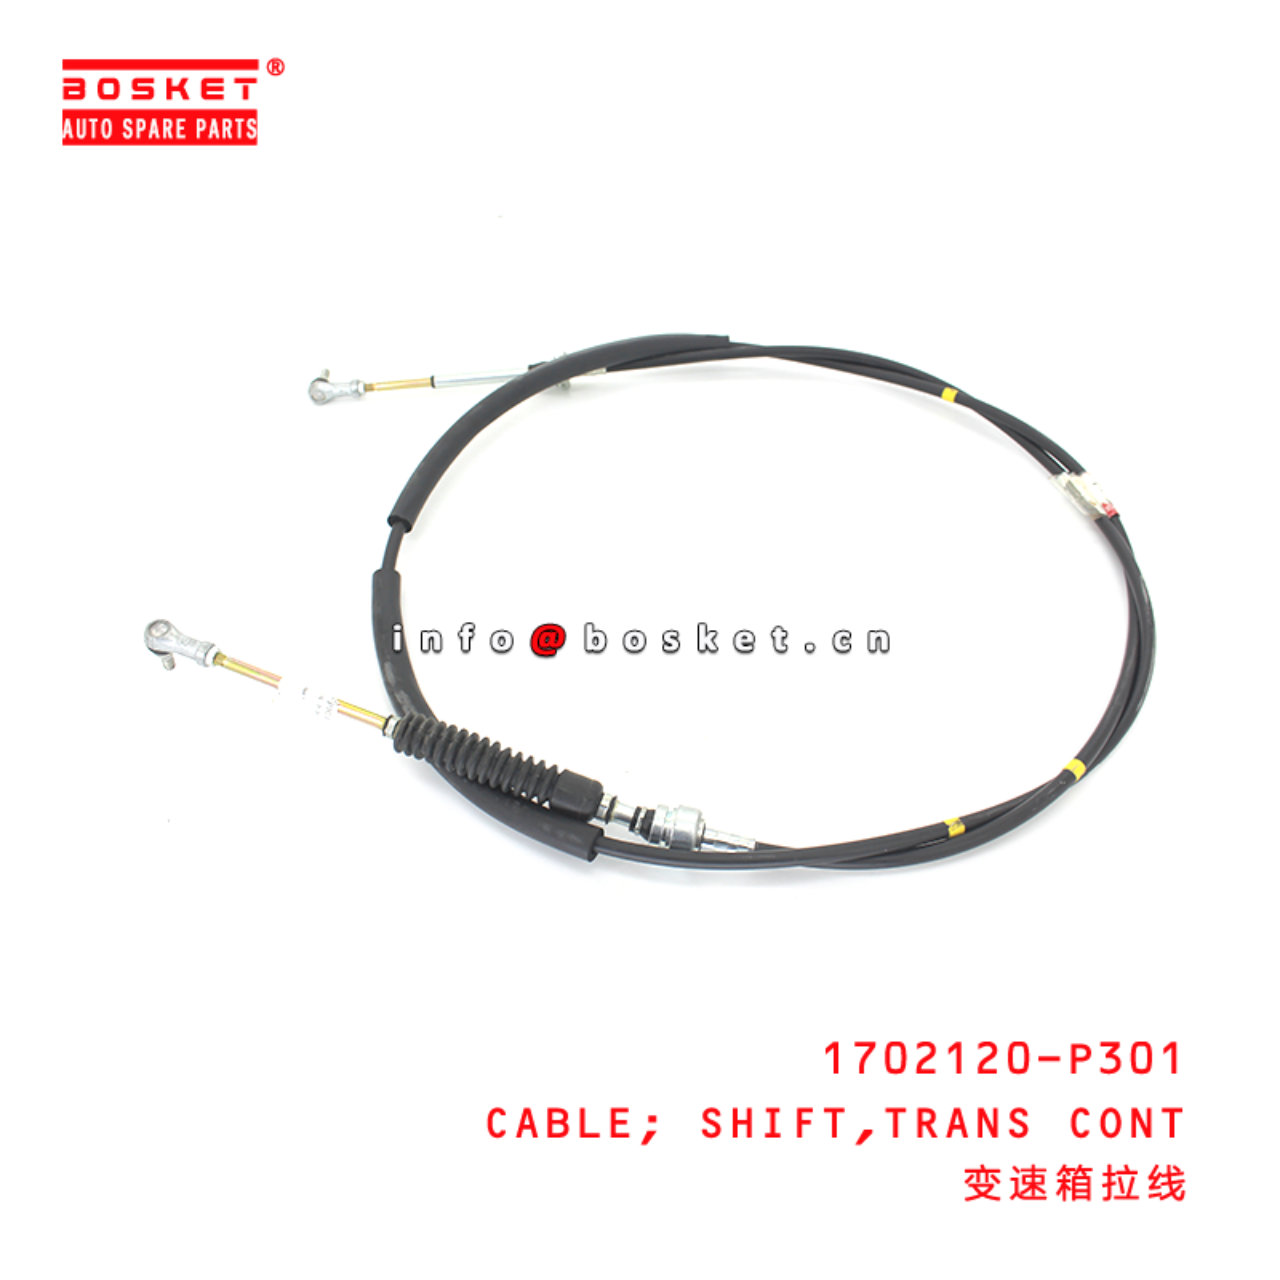 1702120-P301 Transmission Control Shift Cable suitable for ISUZU 700P 1702120-P301